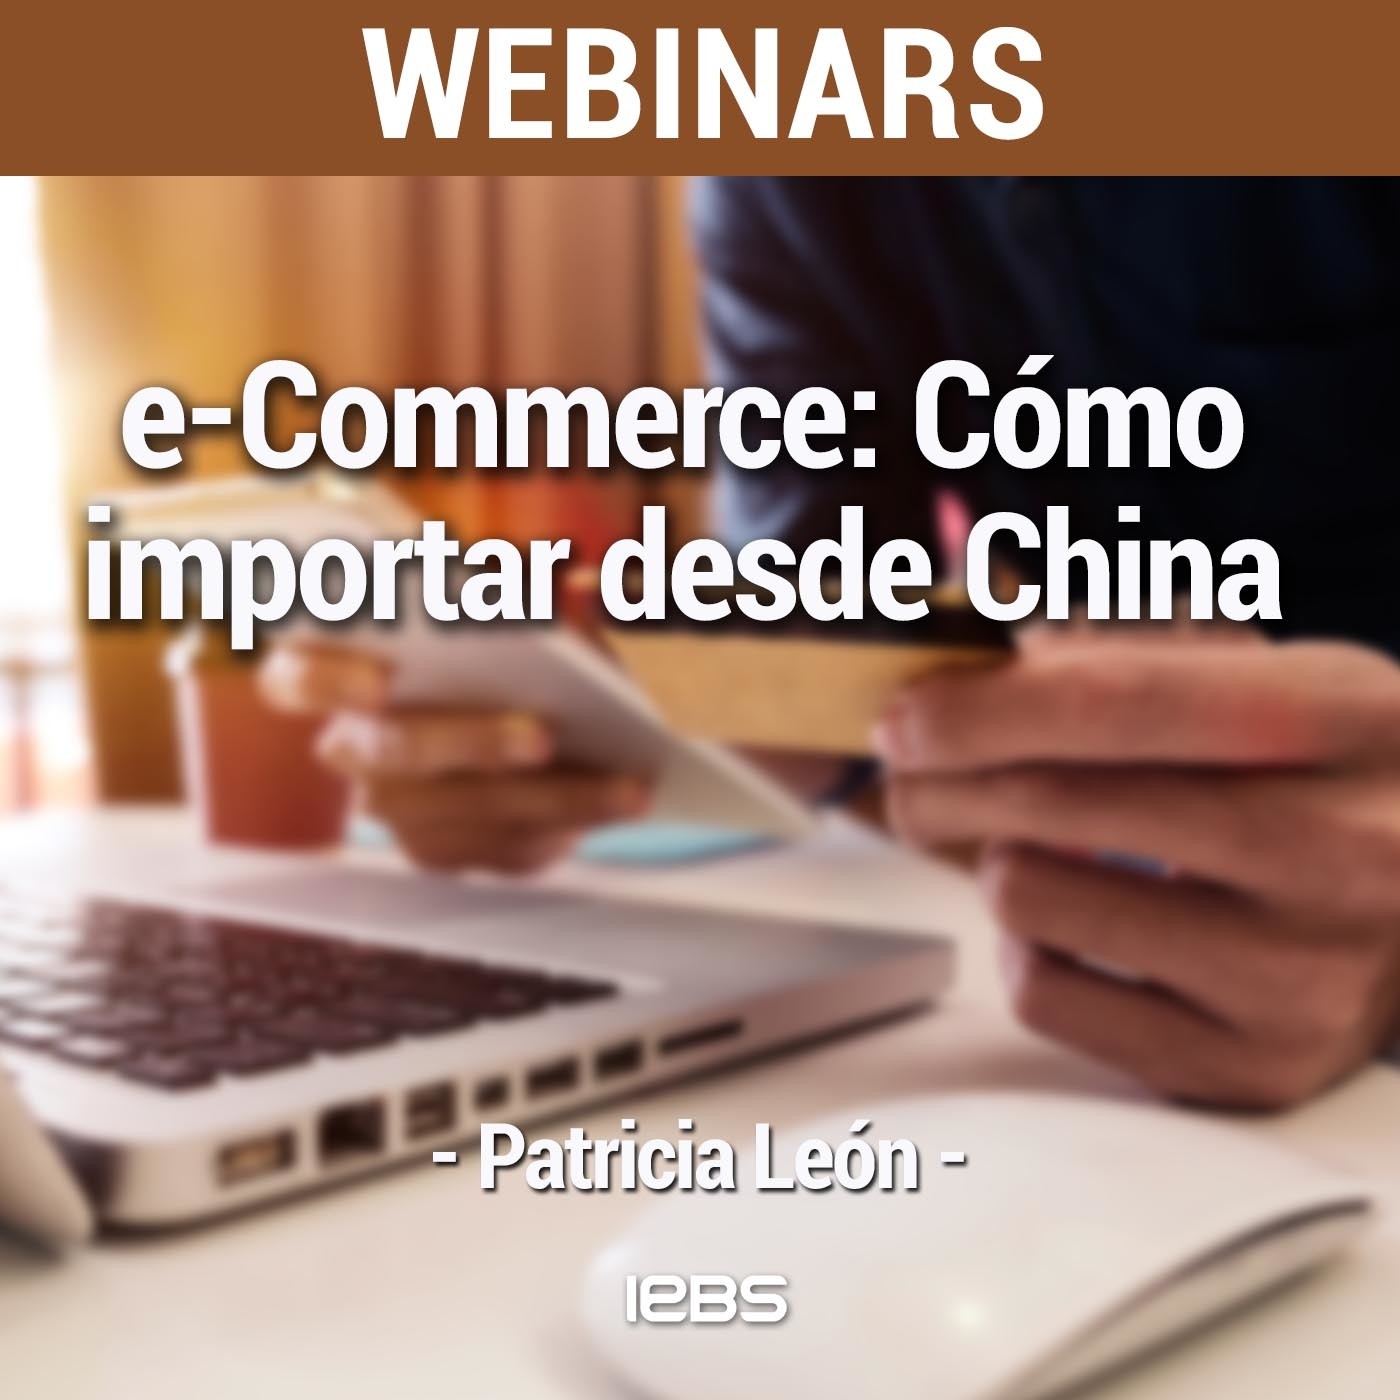 Webinar "e-Commerce: cómo importar desde China" de Akademus from IEBS